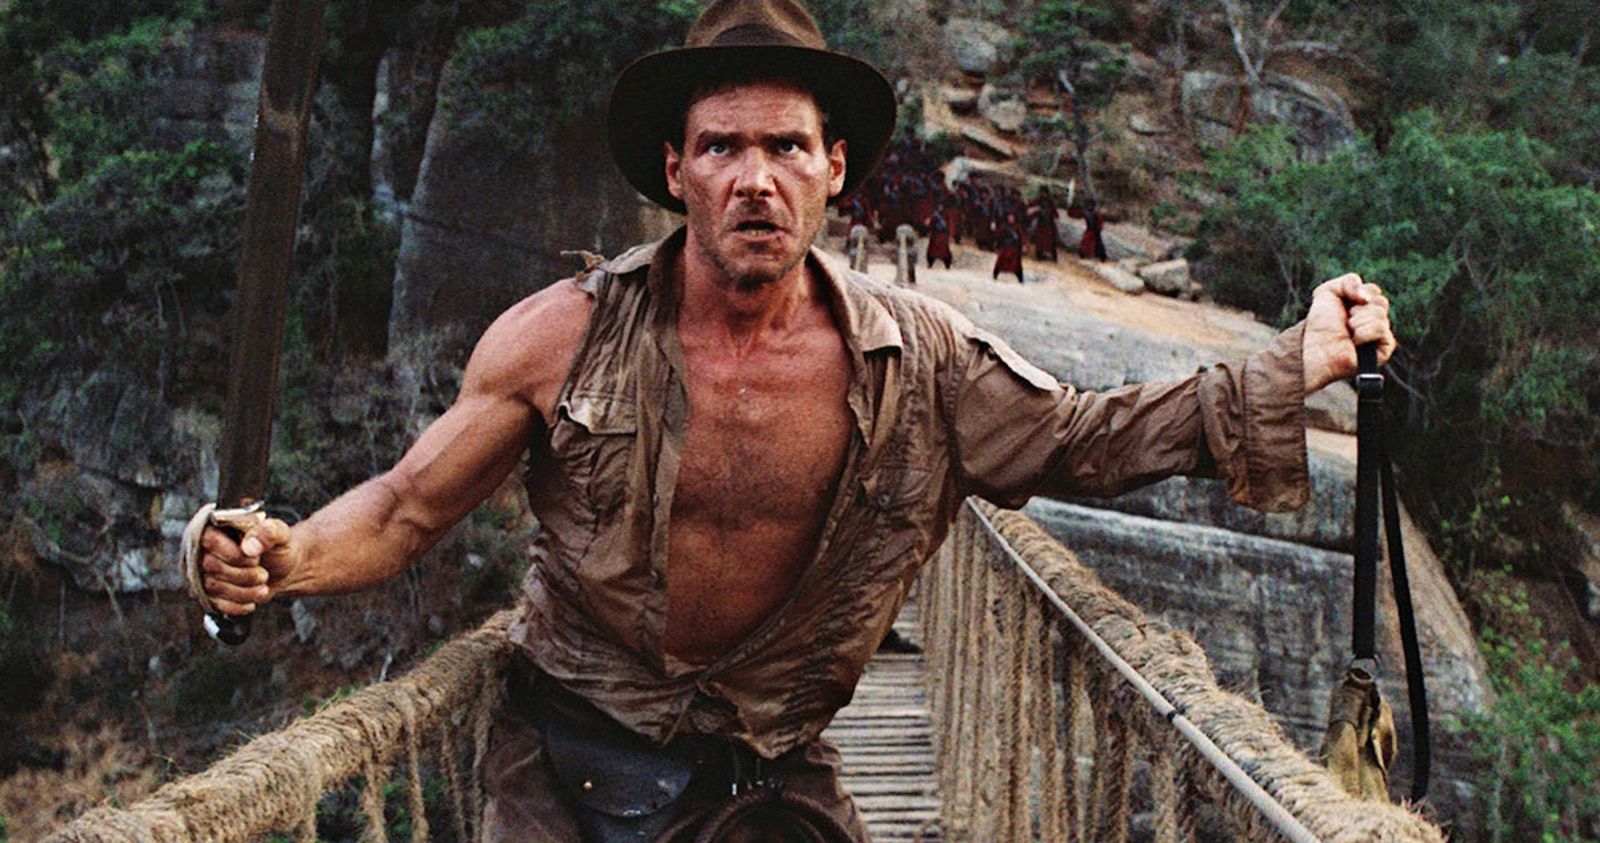 Indiana Jones 5 Gets Delayed Until Summer 2023